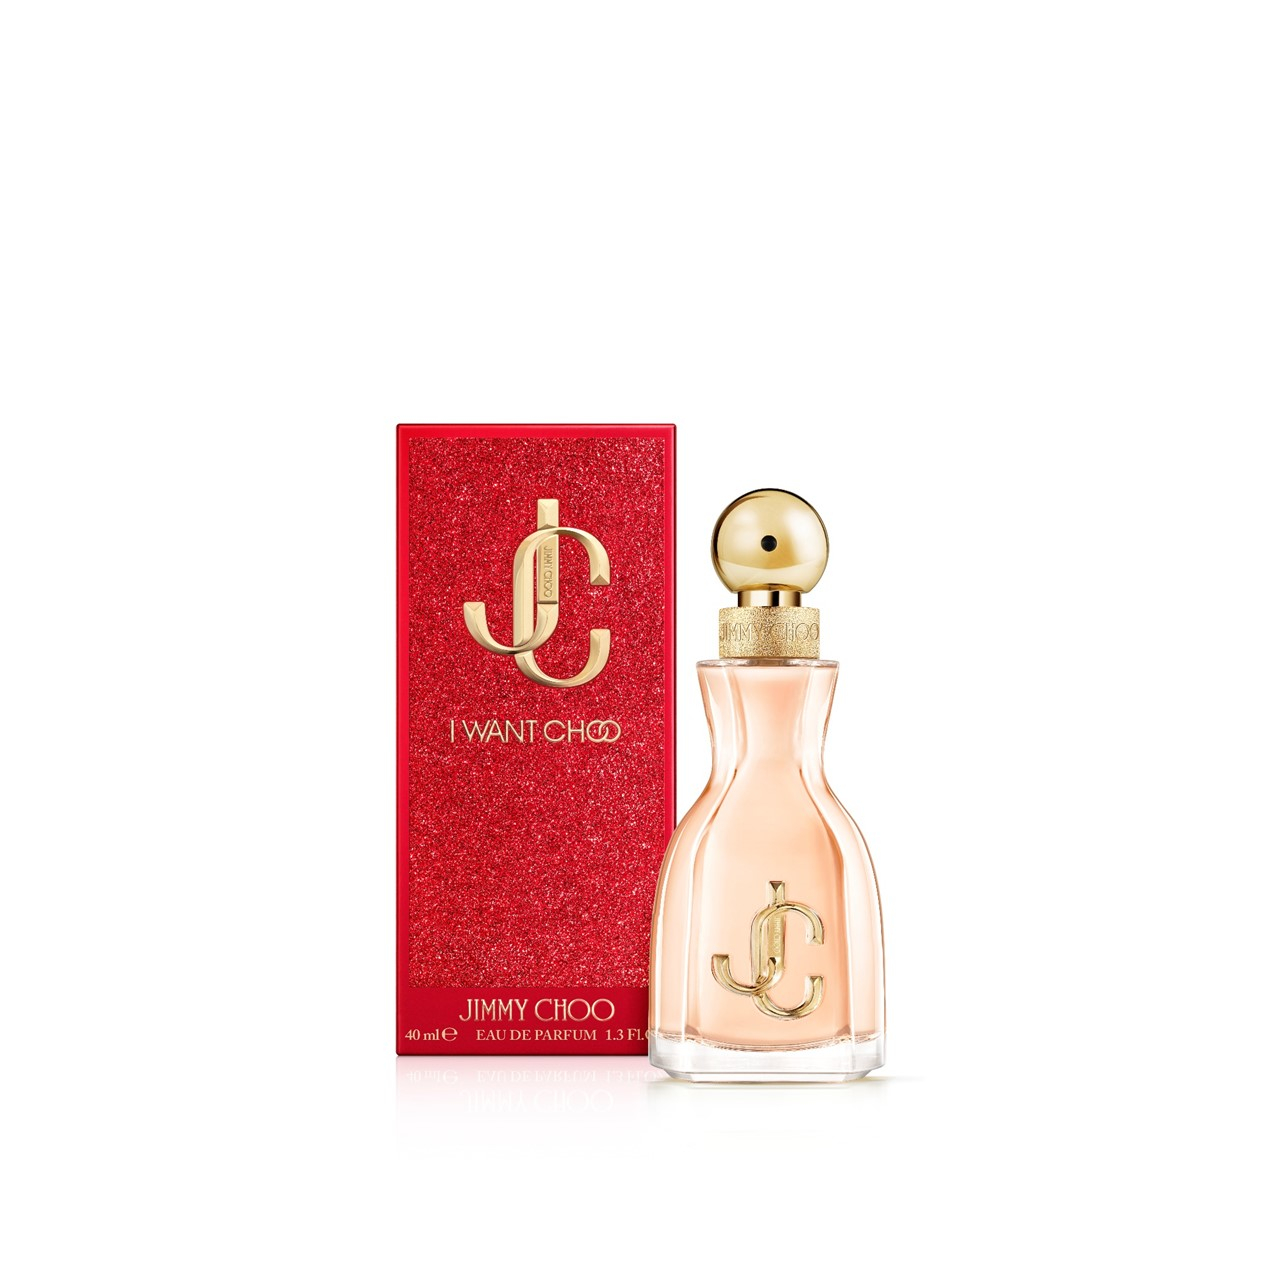 Buy Jimmy Choo I Want Choo Eau de Parfum 40ml (1.4fl oz) · USA